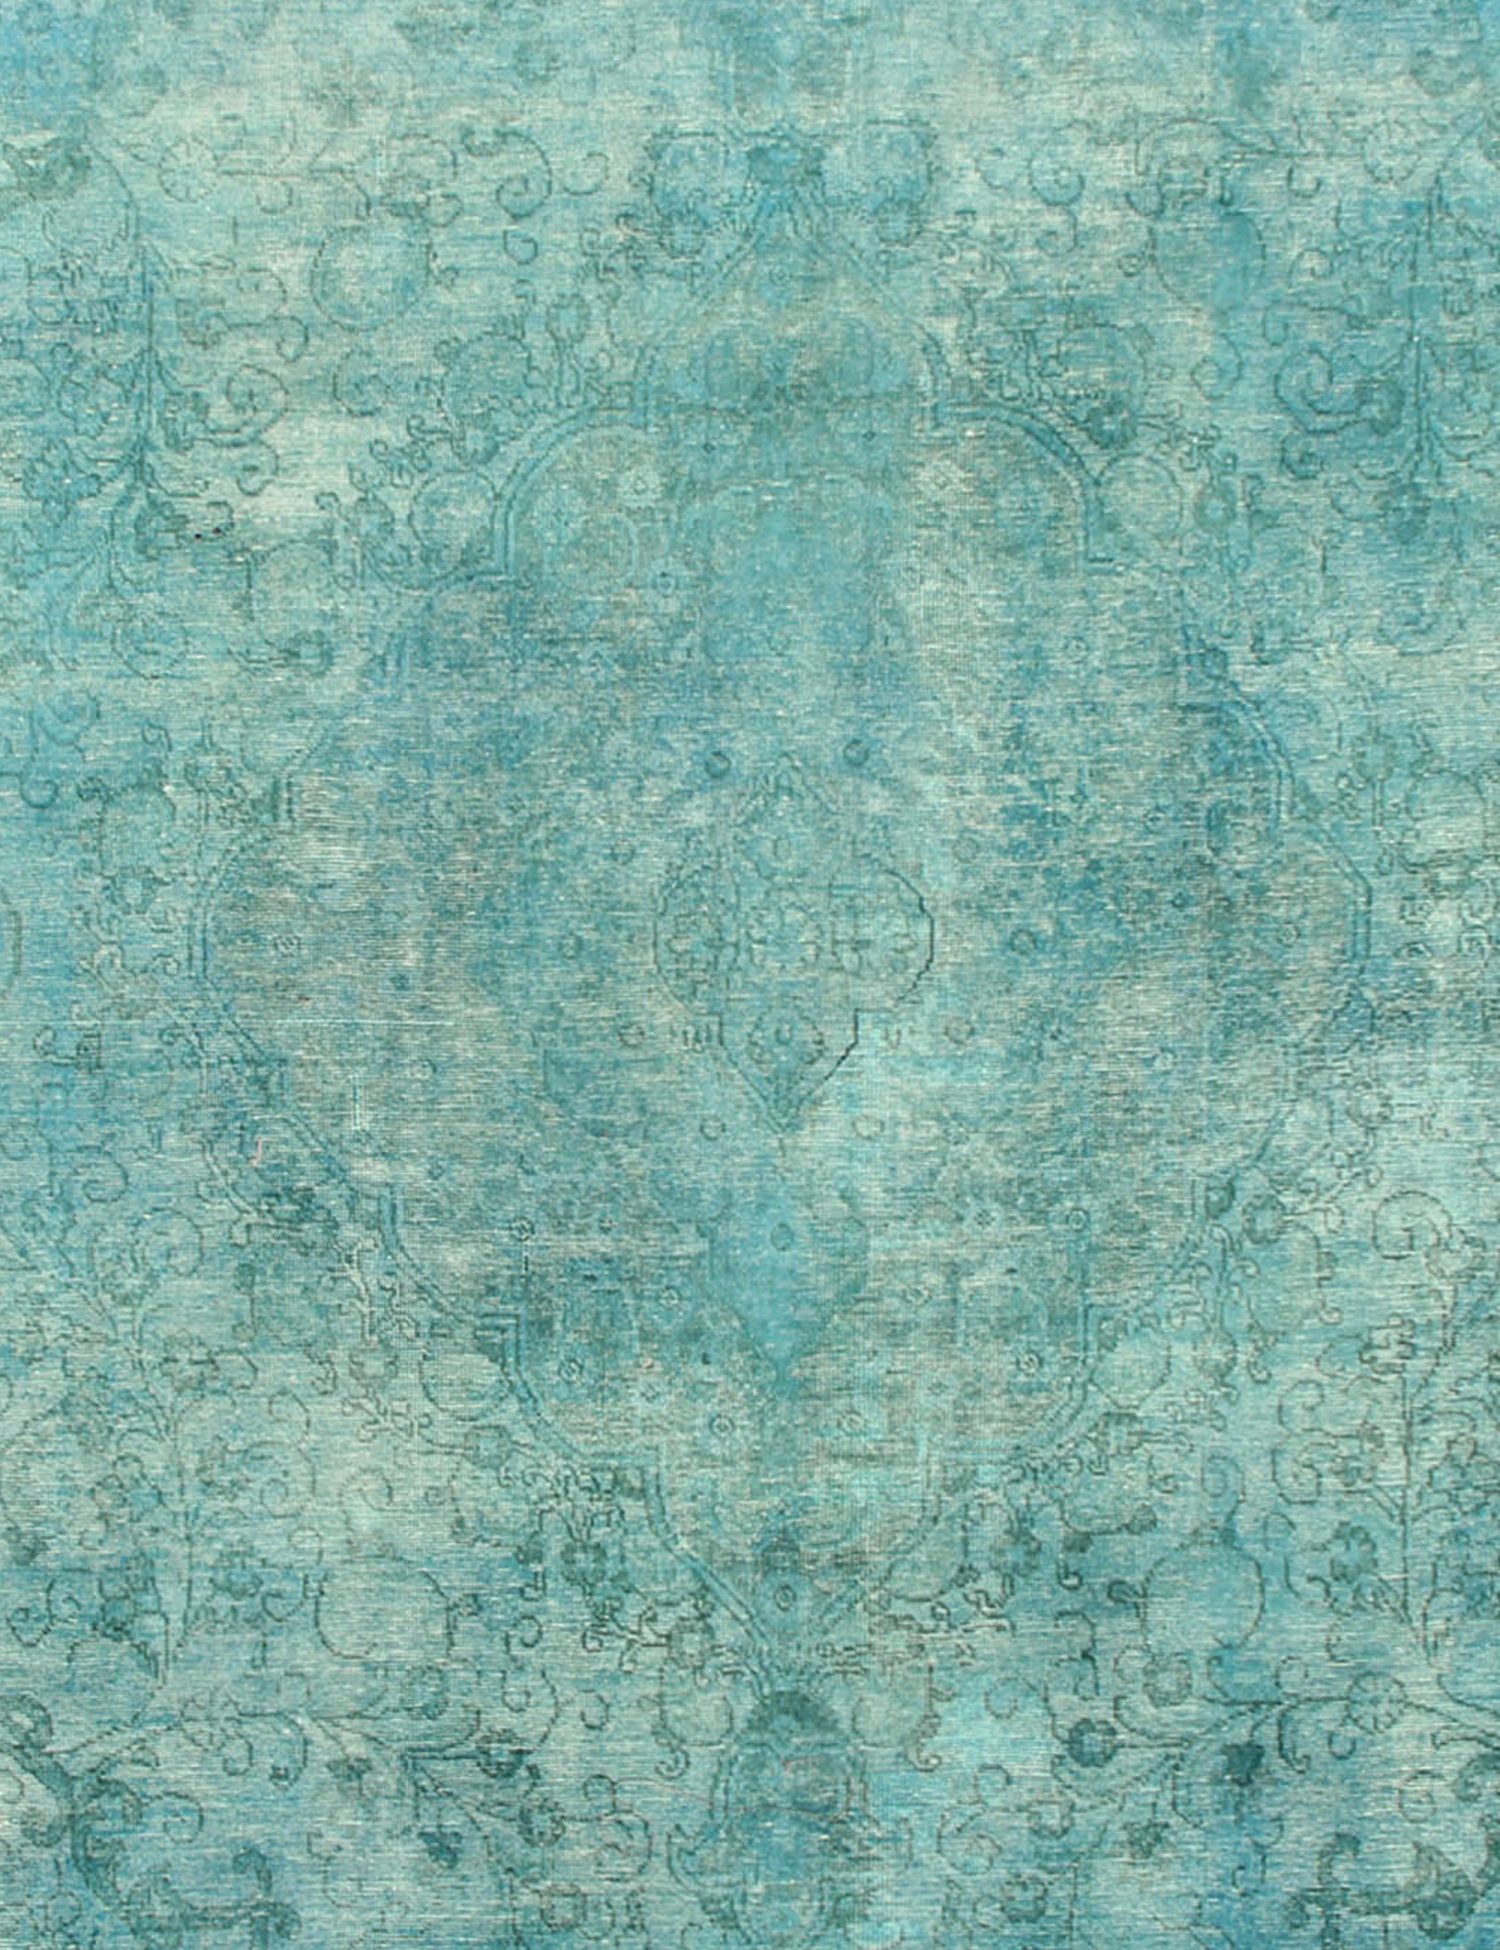 Persialaiset vintage matot  turkoosi <br/>340 x 285 cm